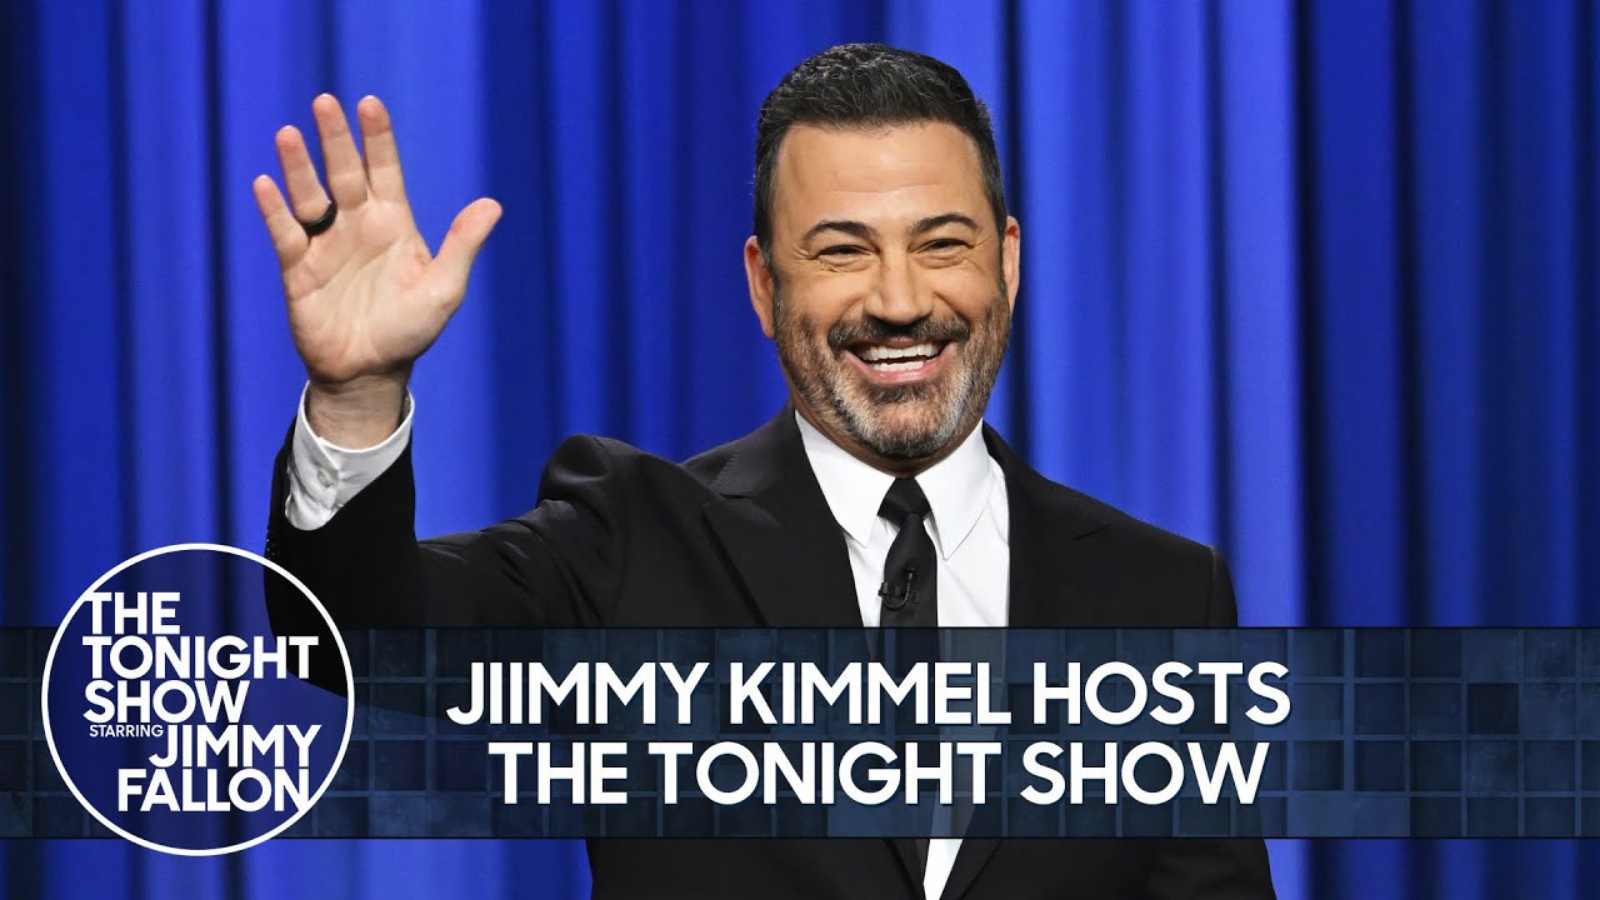 Jimmy Kimmel hosts The Tonight Show 